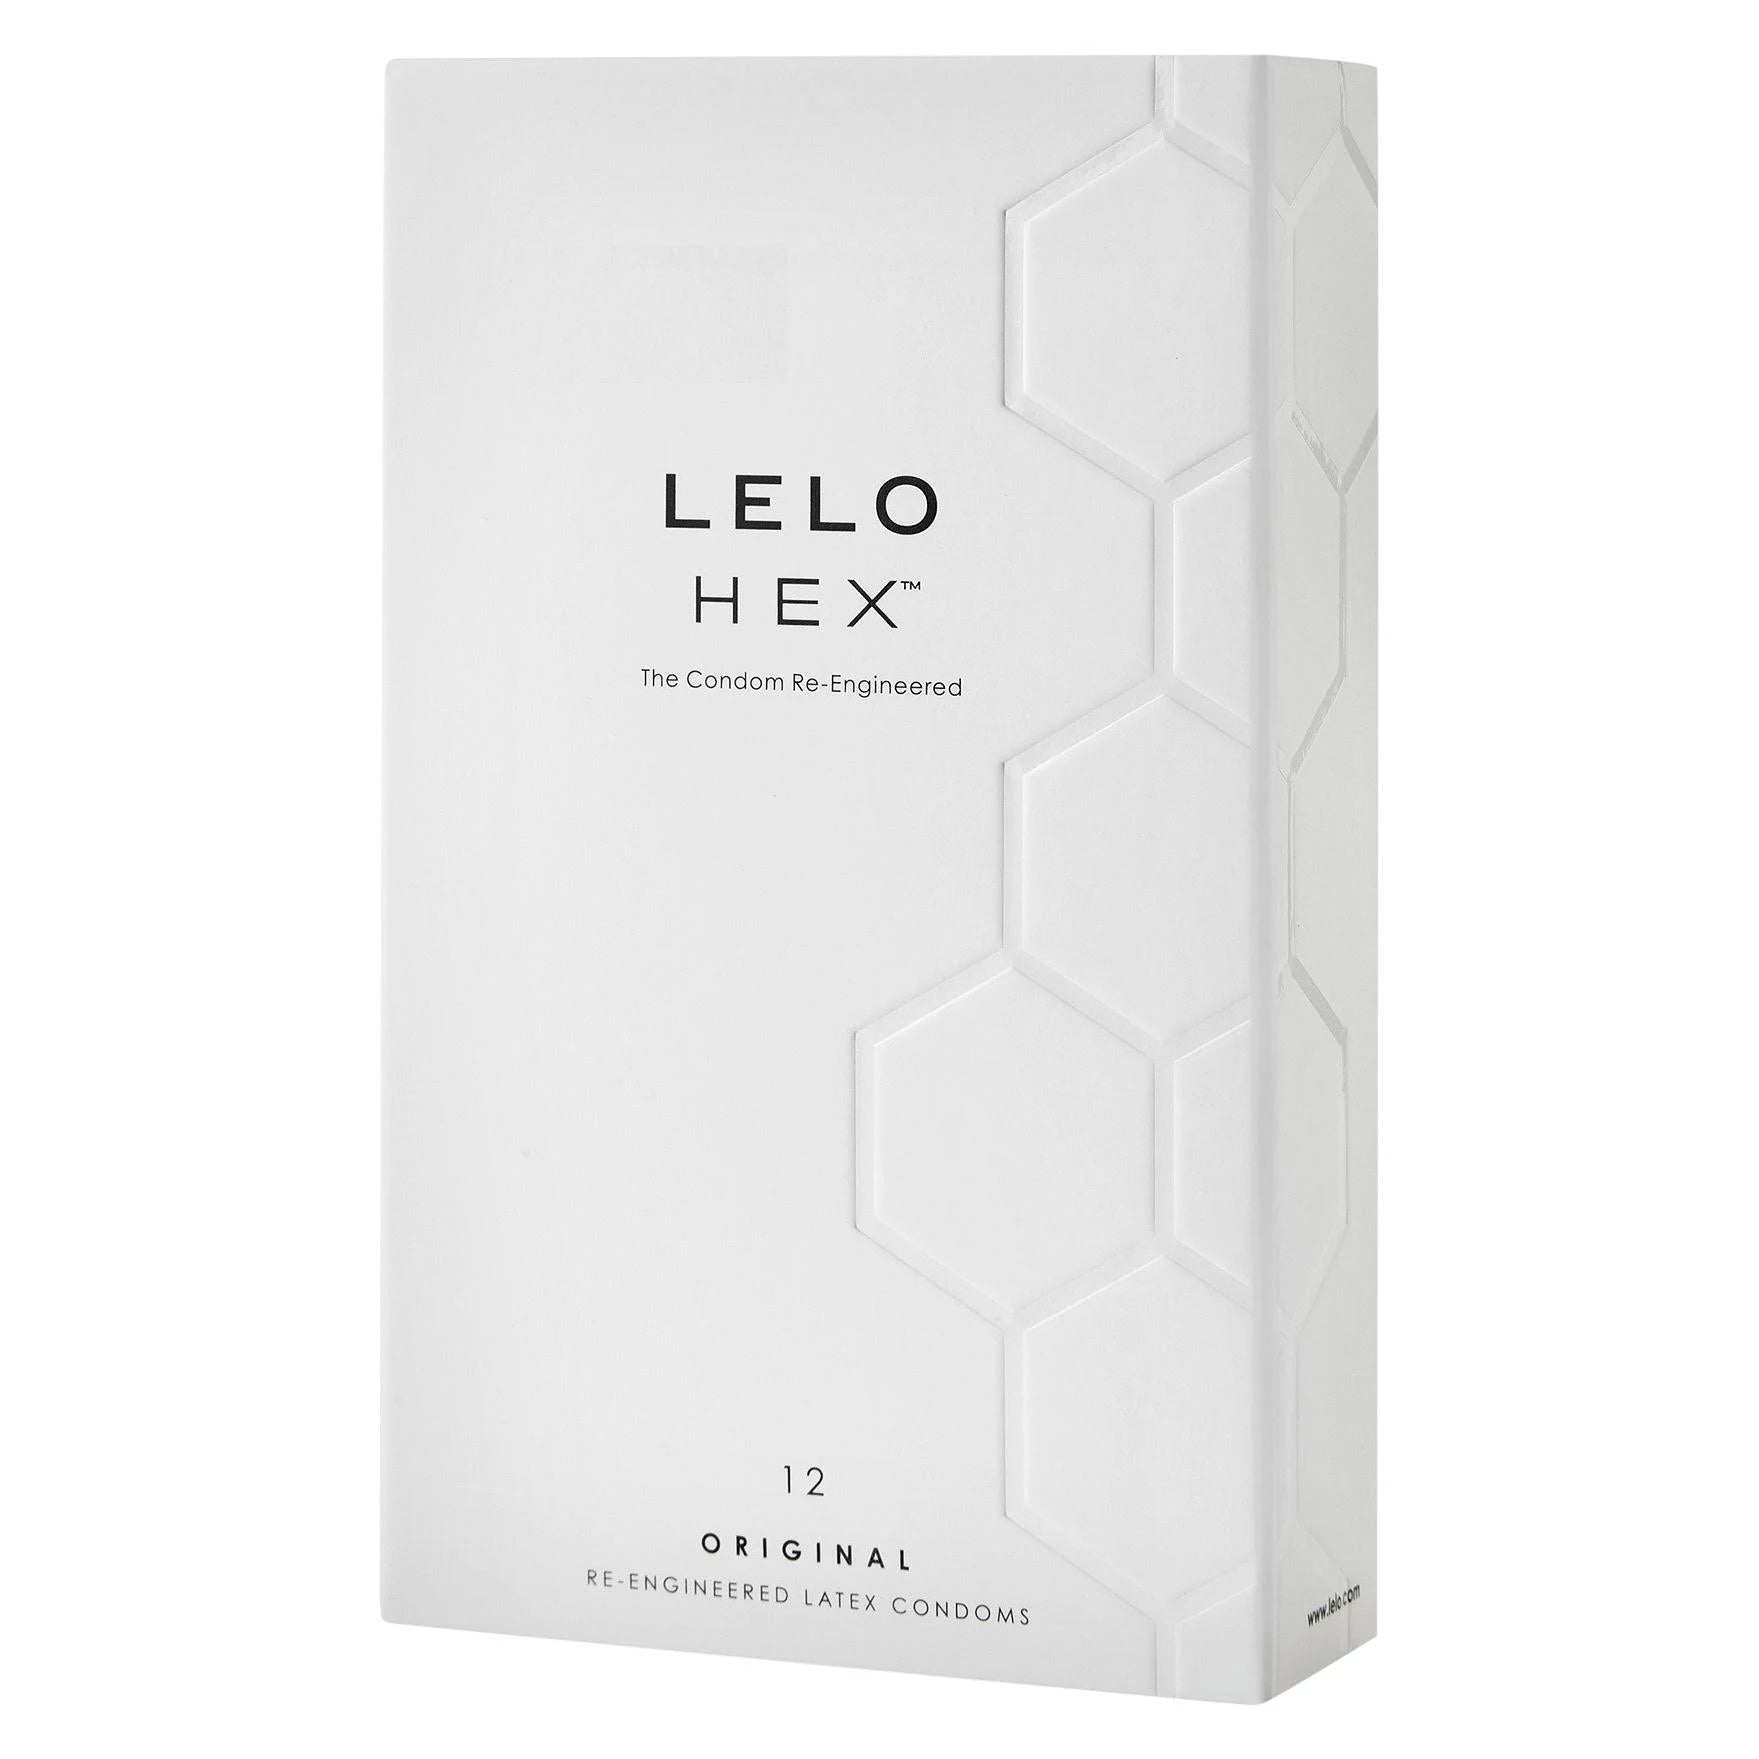 Lelo Hex™ Condom